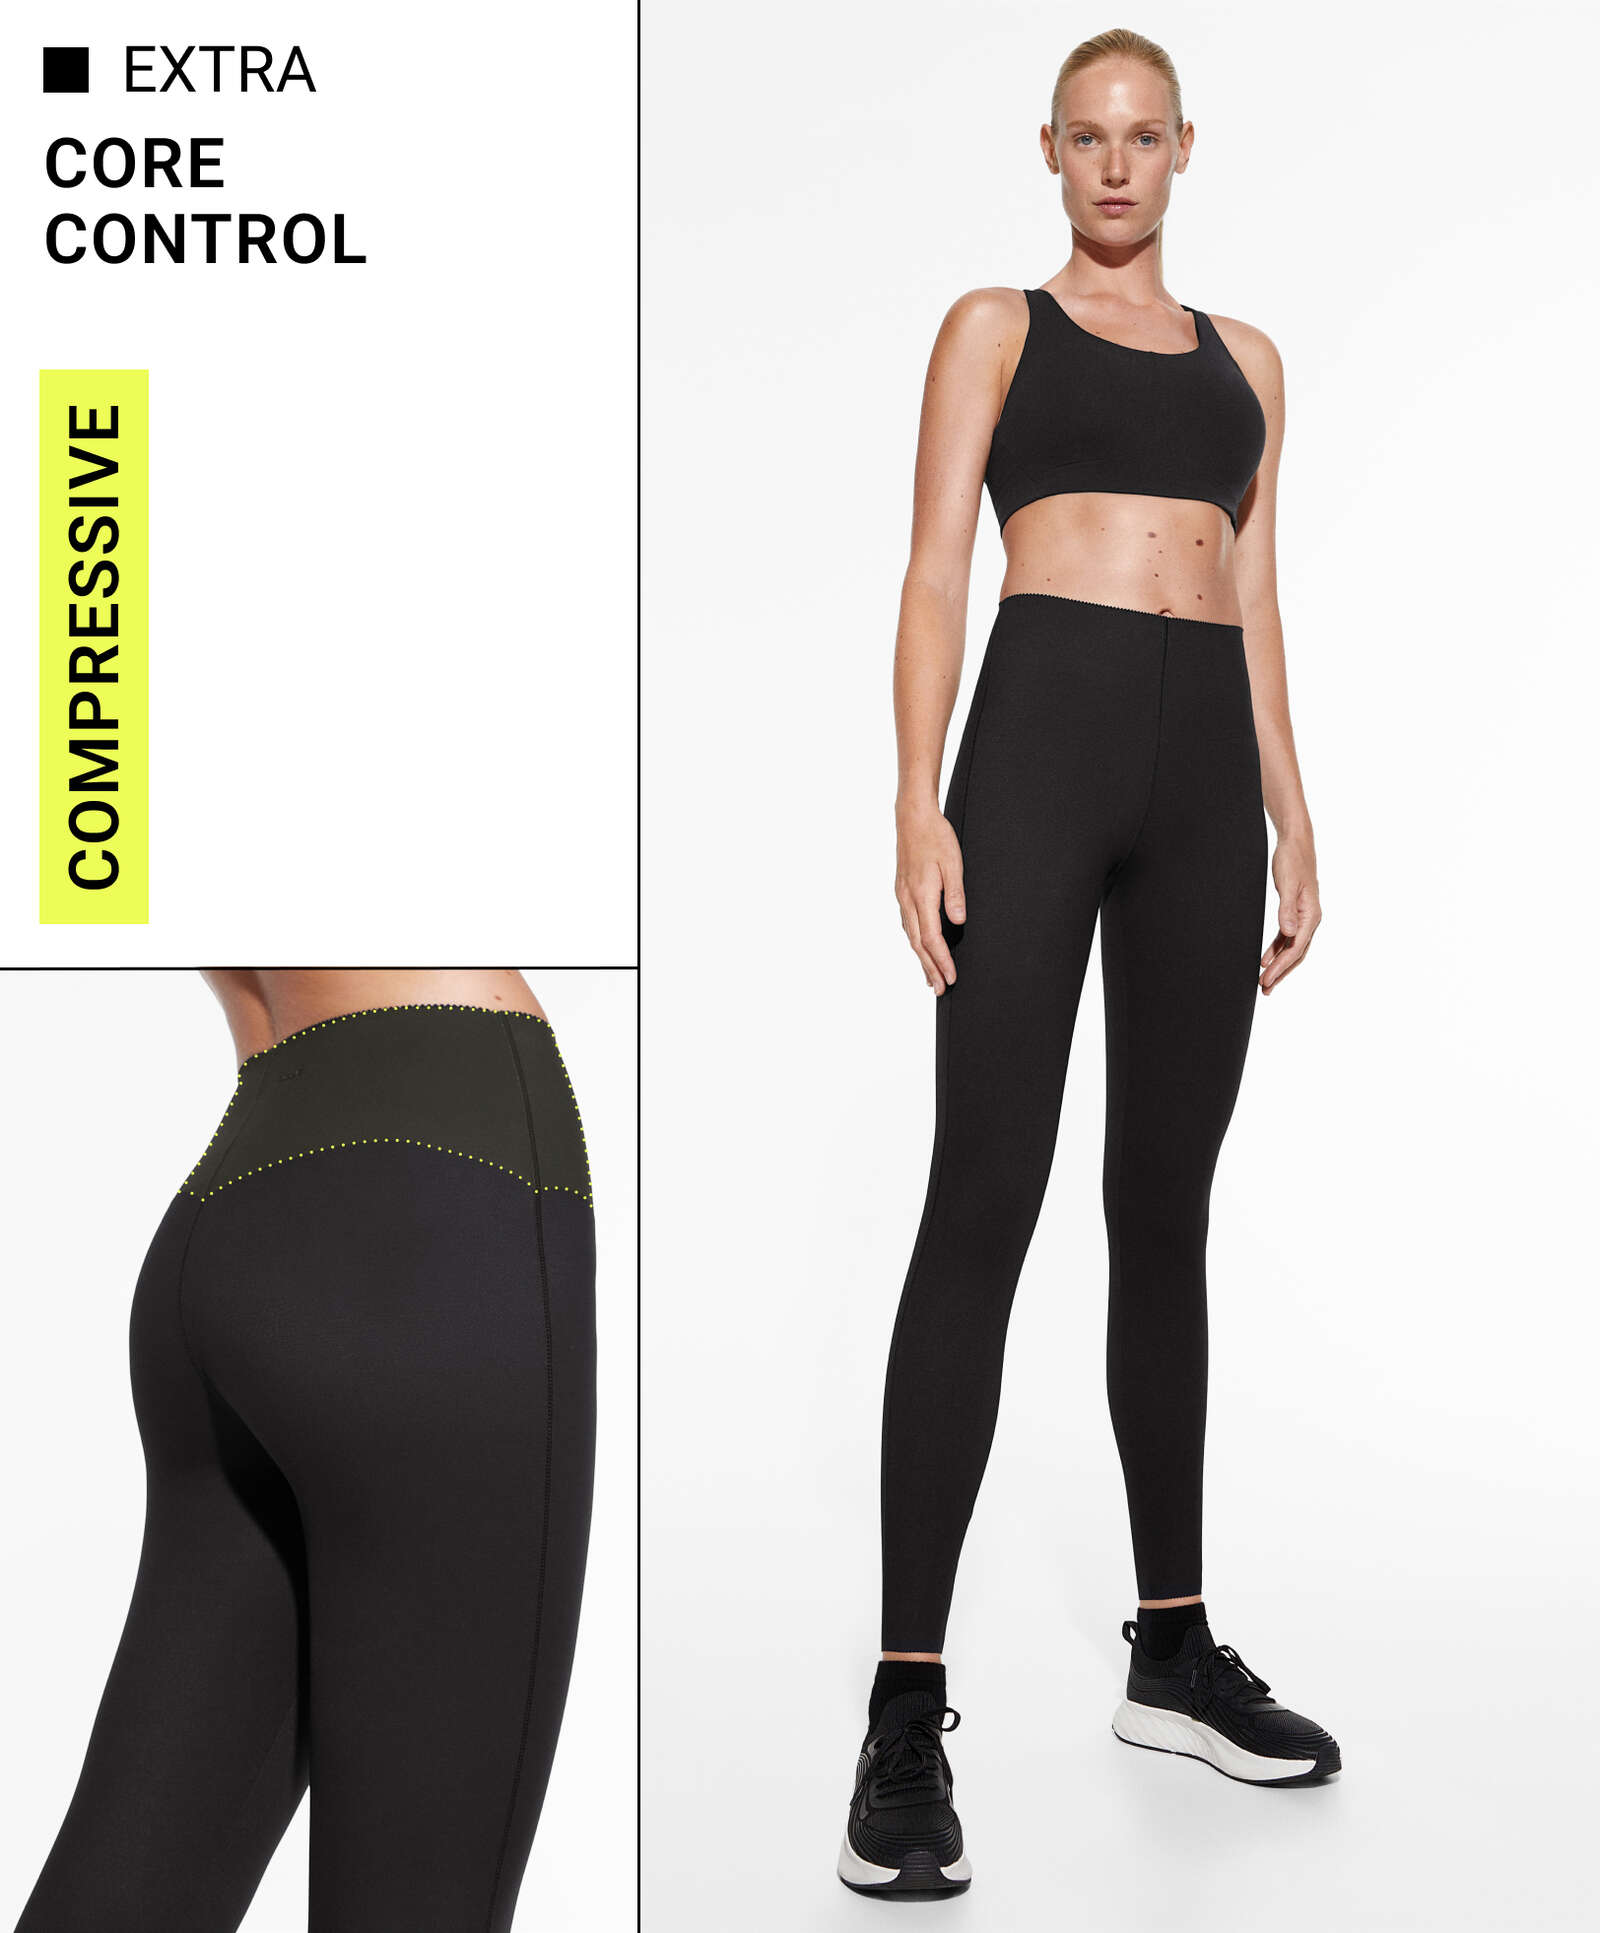 Compressive core control ankle-length leggings